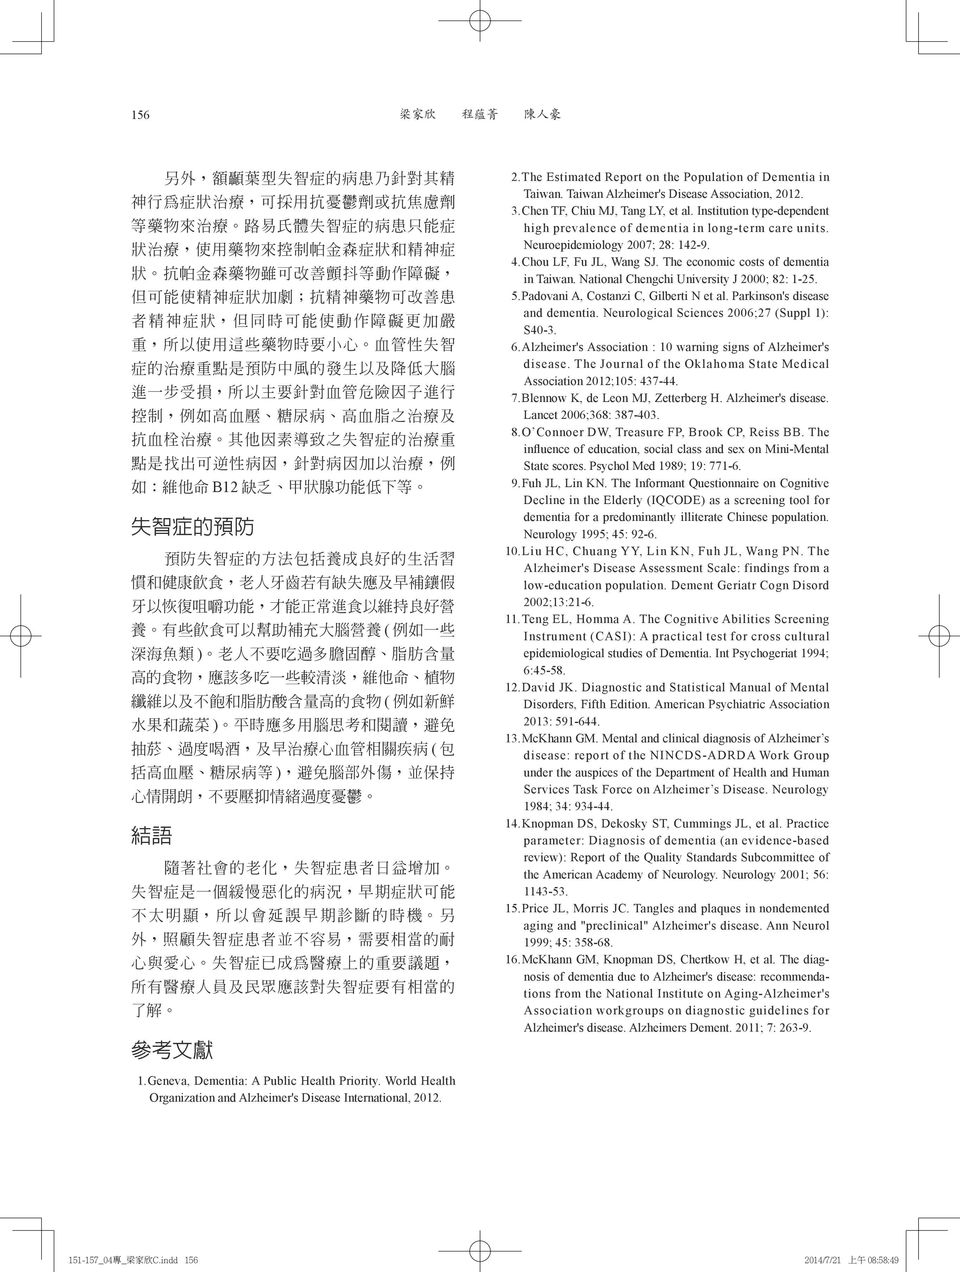 National Chengchi University J 2000; 82: 1-25. 5. Padovani A, Costanzi C, Gilberti N et al. Parkinson's disease and dementia. Neurological Sciences 2006;27 (Suppl 1): S40-3. 6.